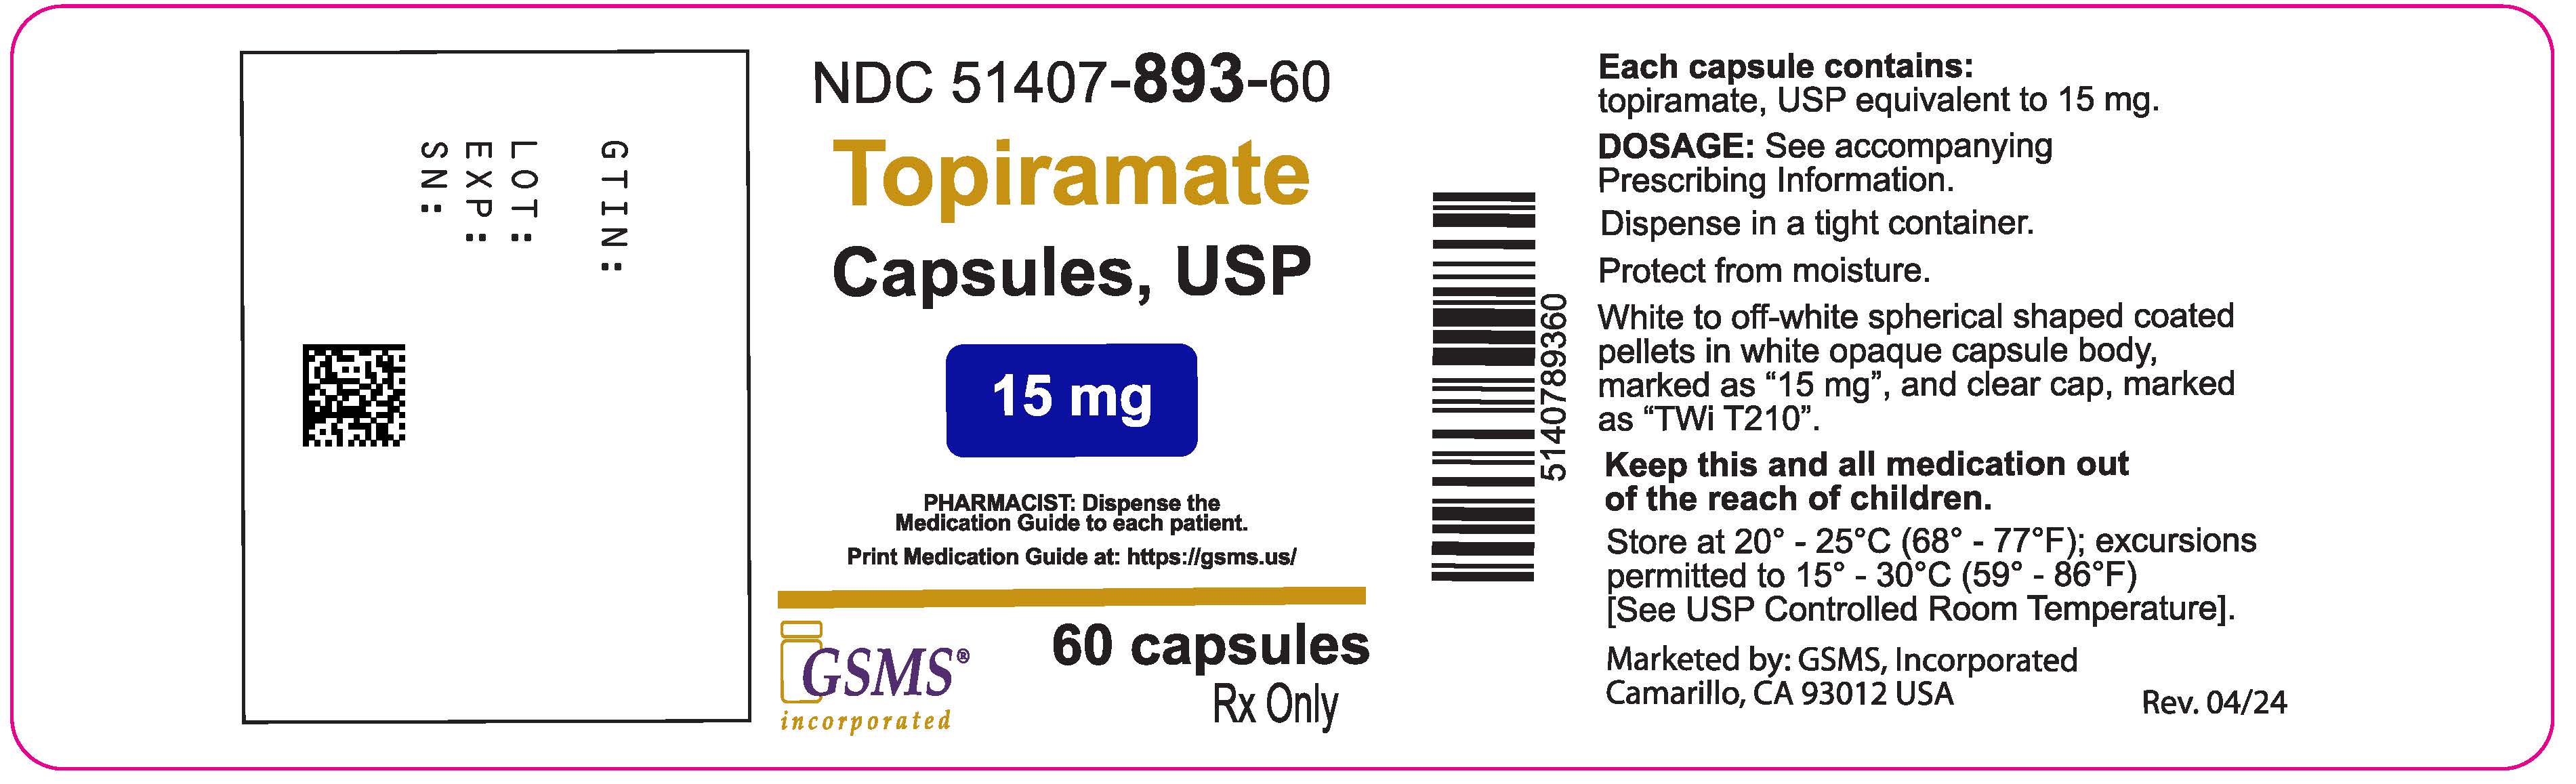 51407-893-60OL - Topiramate 15 mg - Rev. 0424.jpg